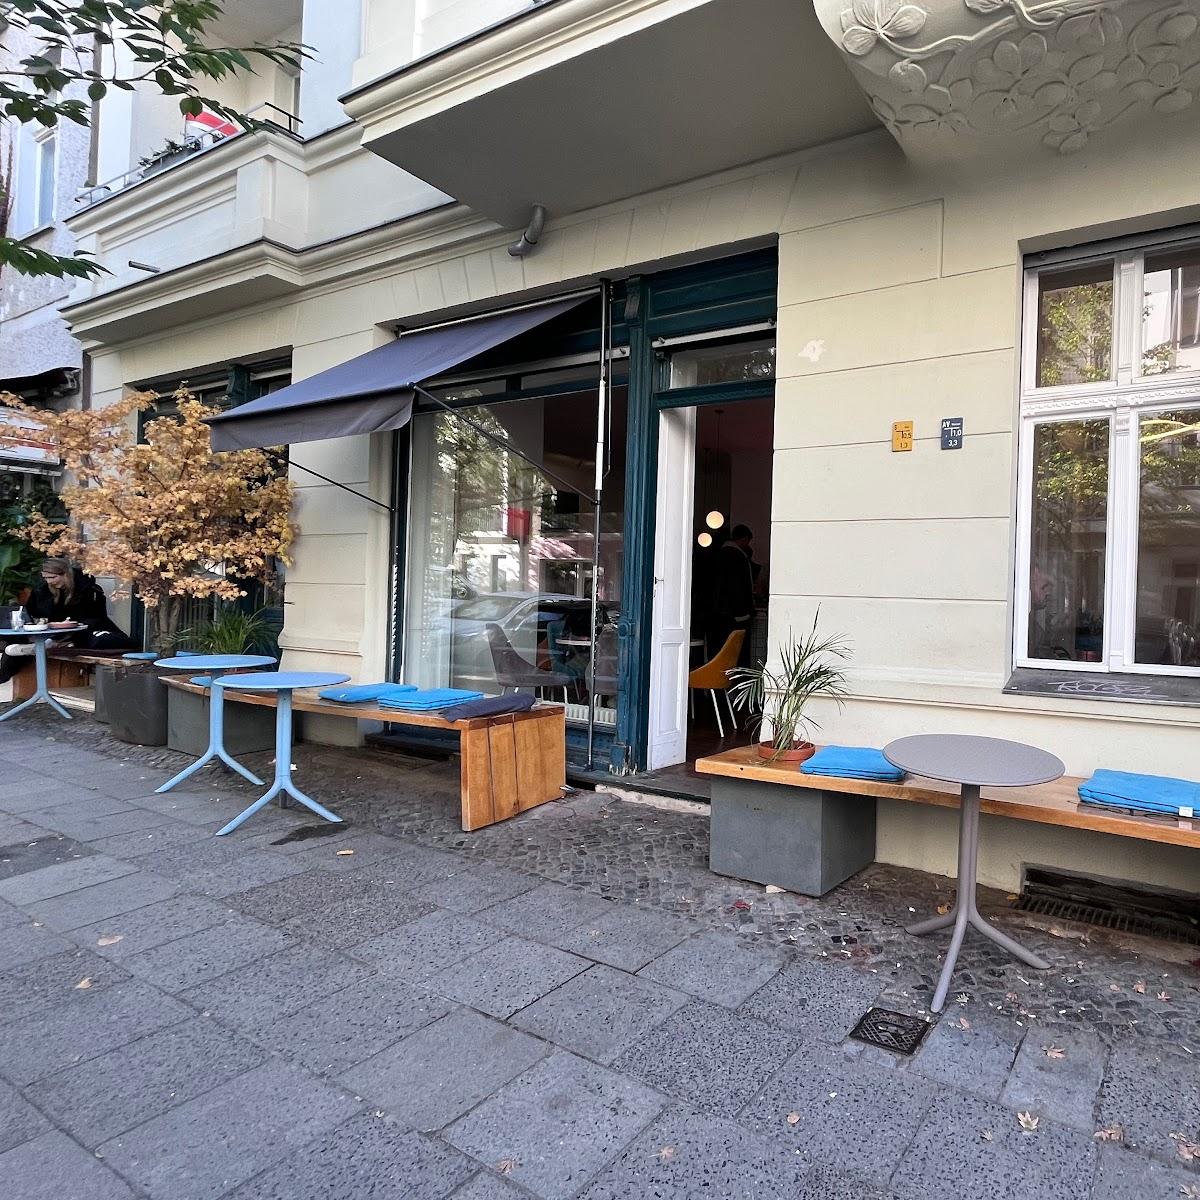 Restaurant "Greenfinch" in Berlin